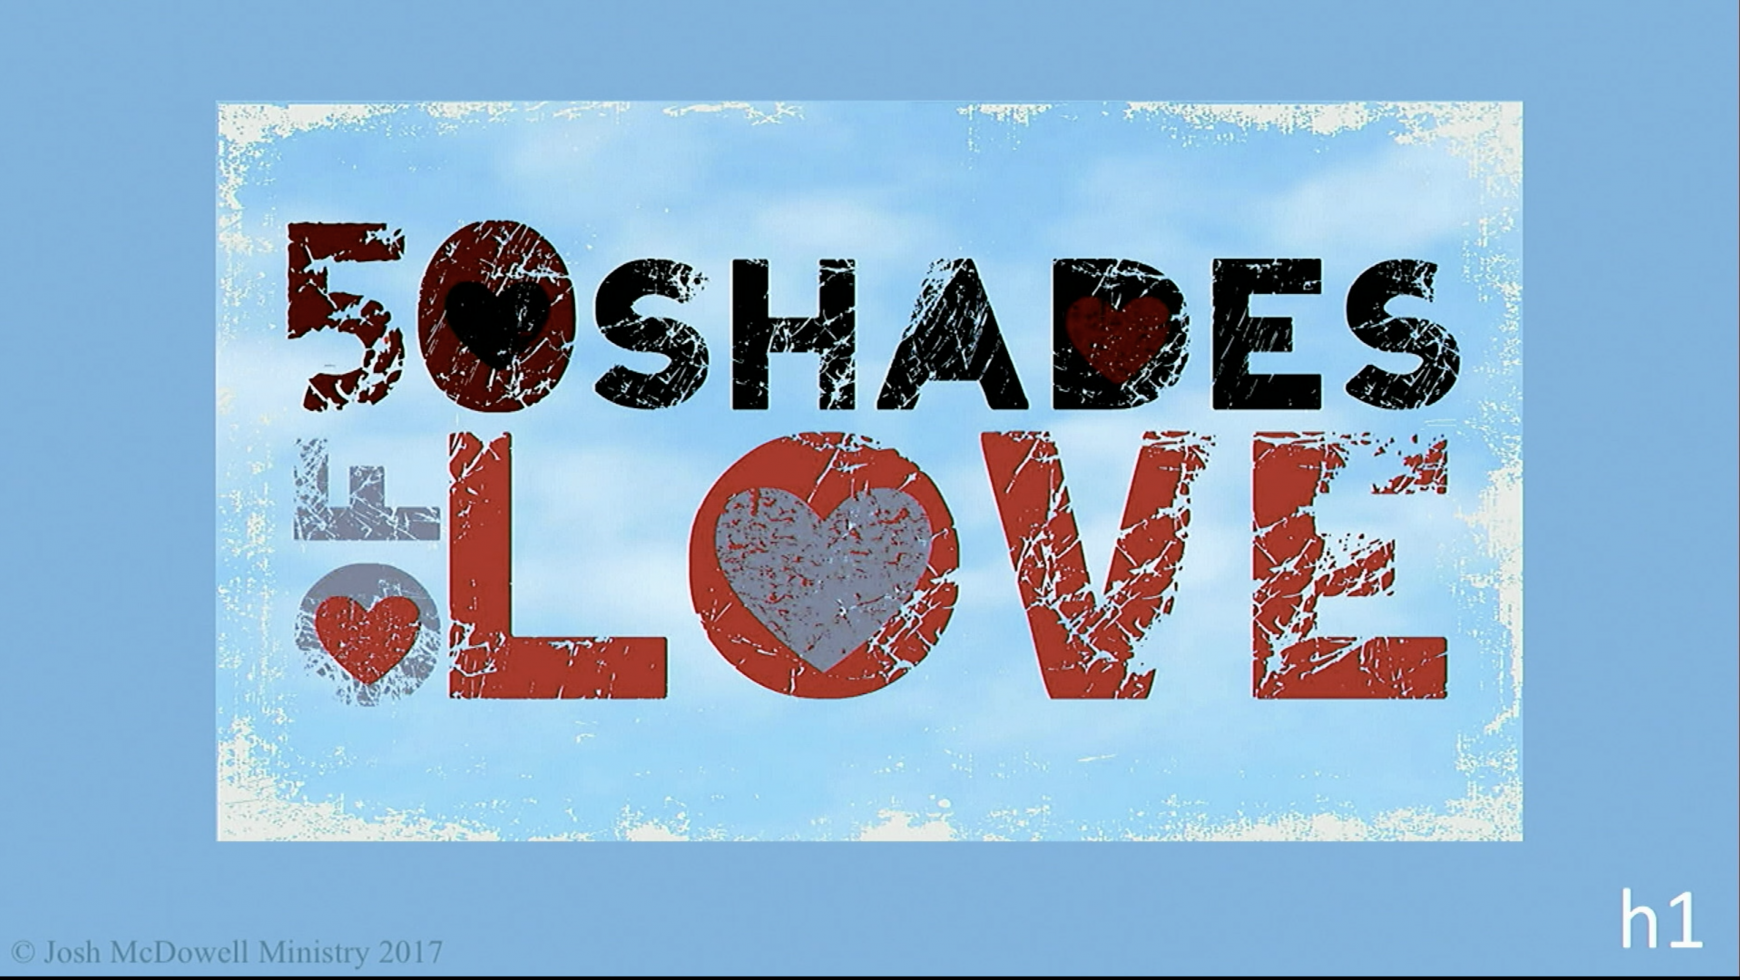 50 Shades of Love